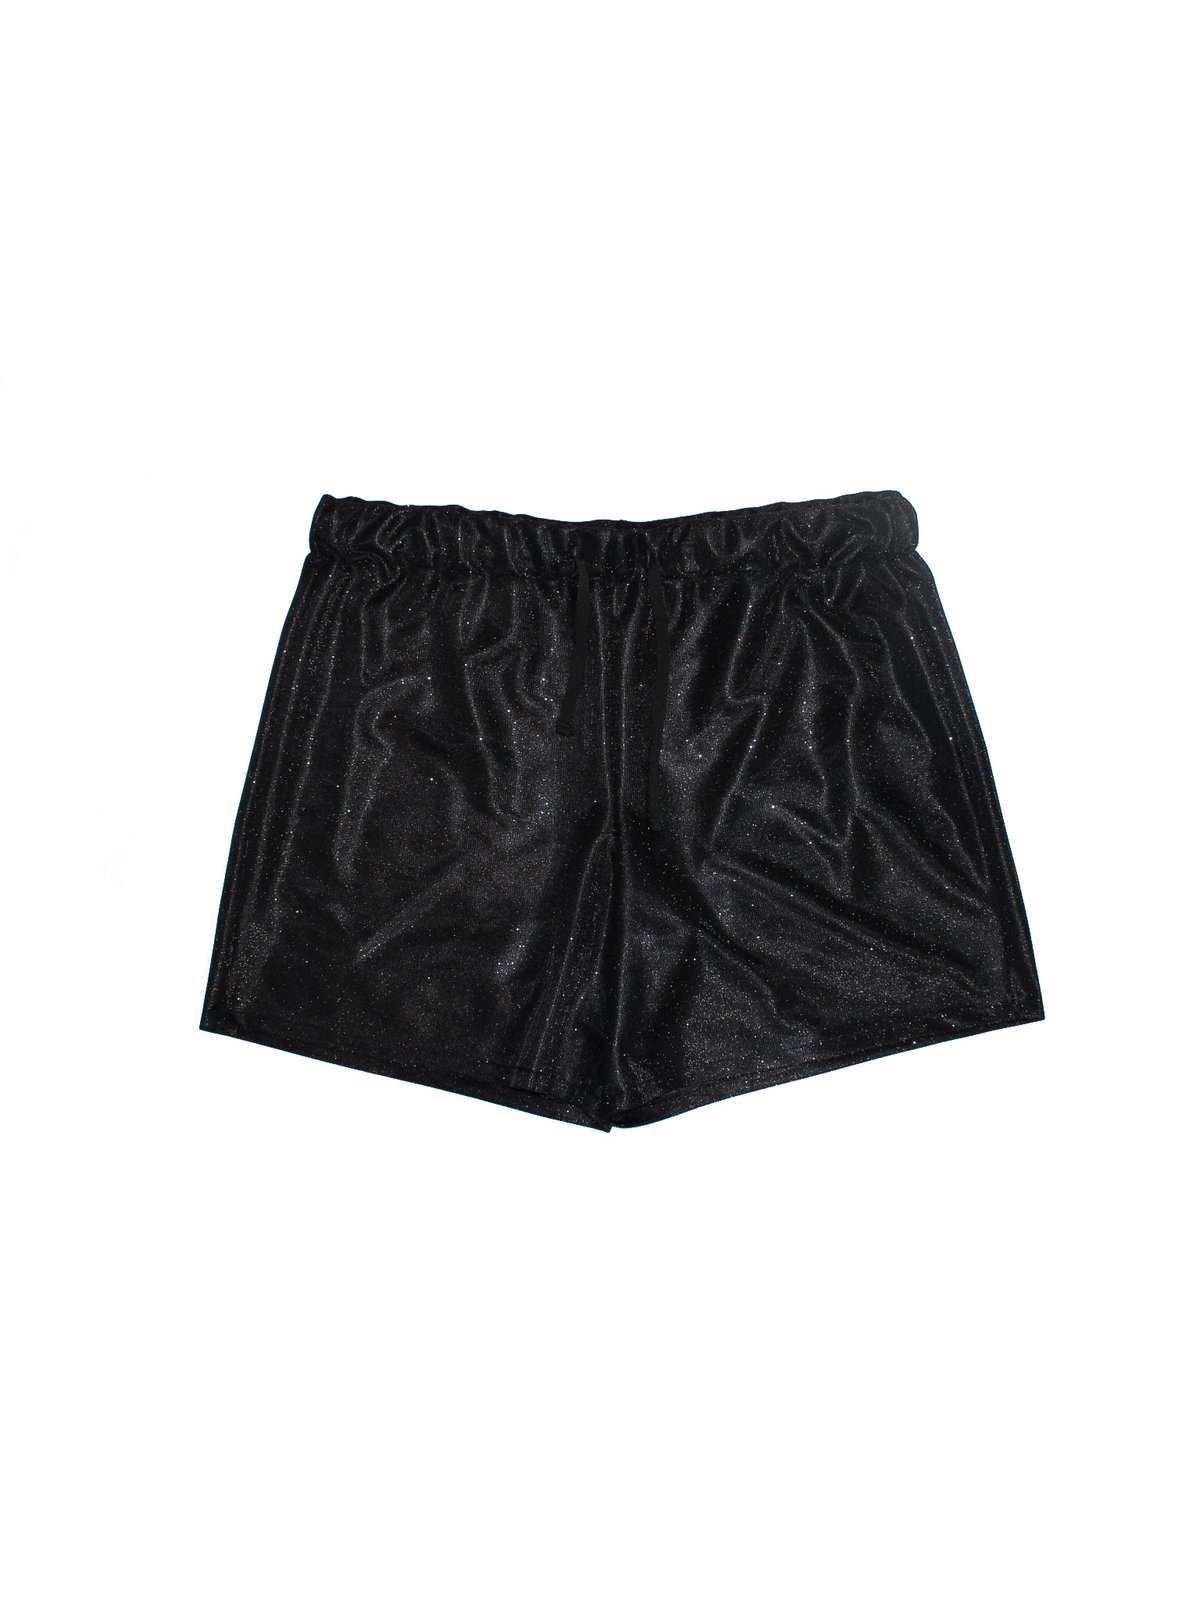 Image of Black glitter shorts 